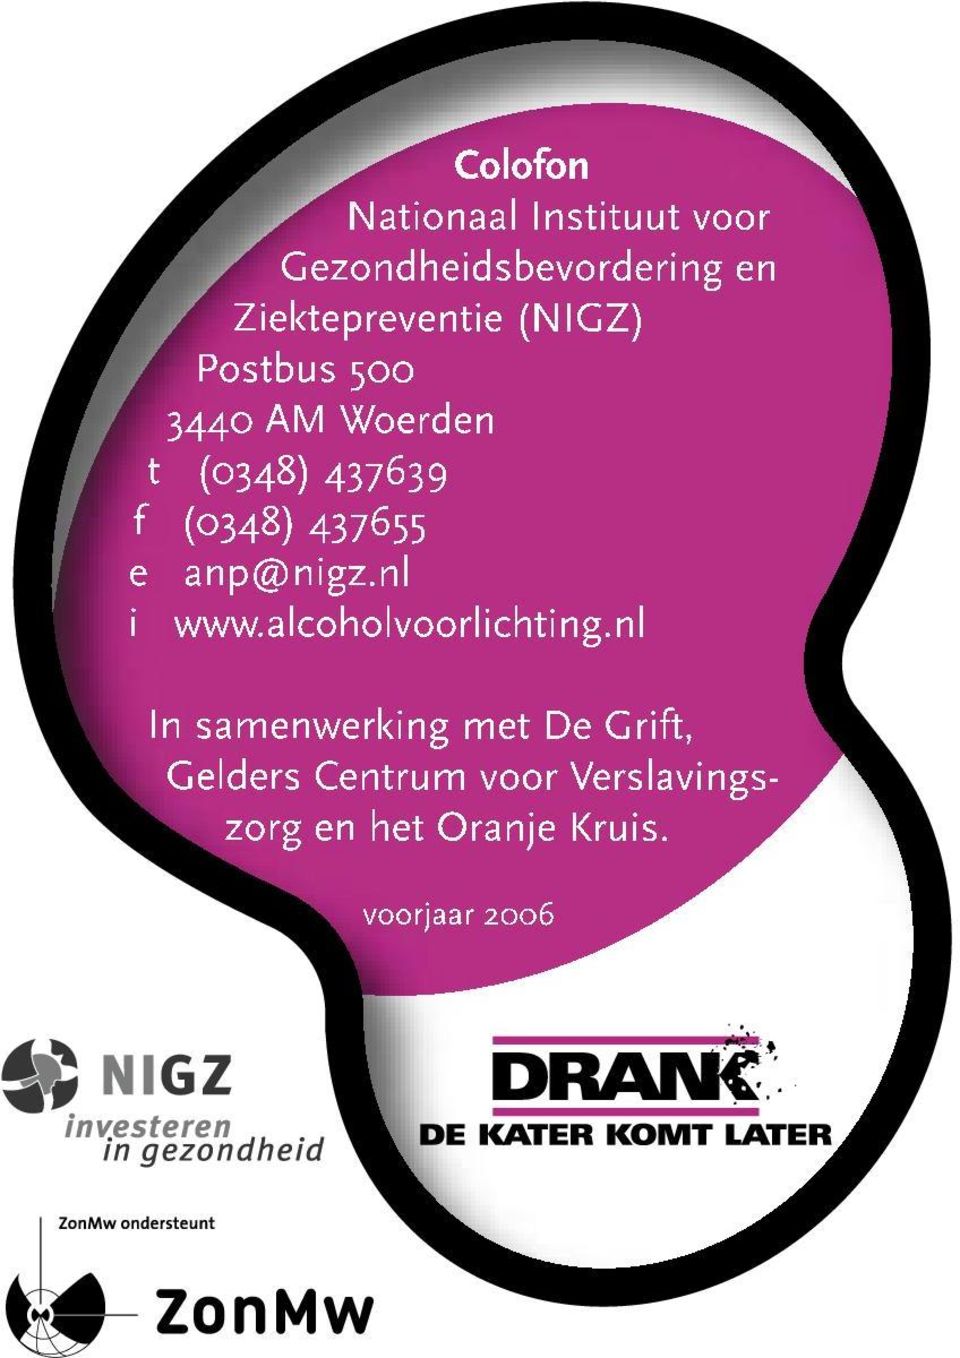 (0348) 437655 e anp@nigz.nl i www.alcoholvoorlichting.